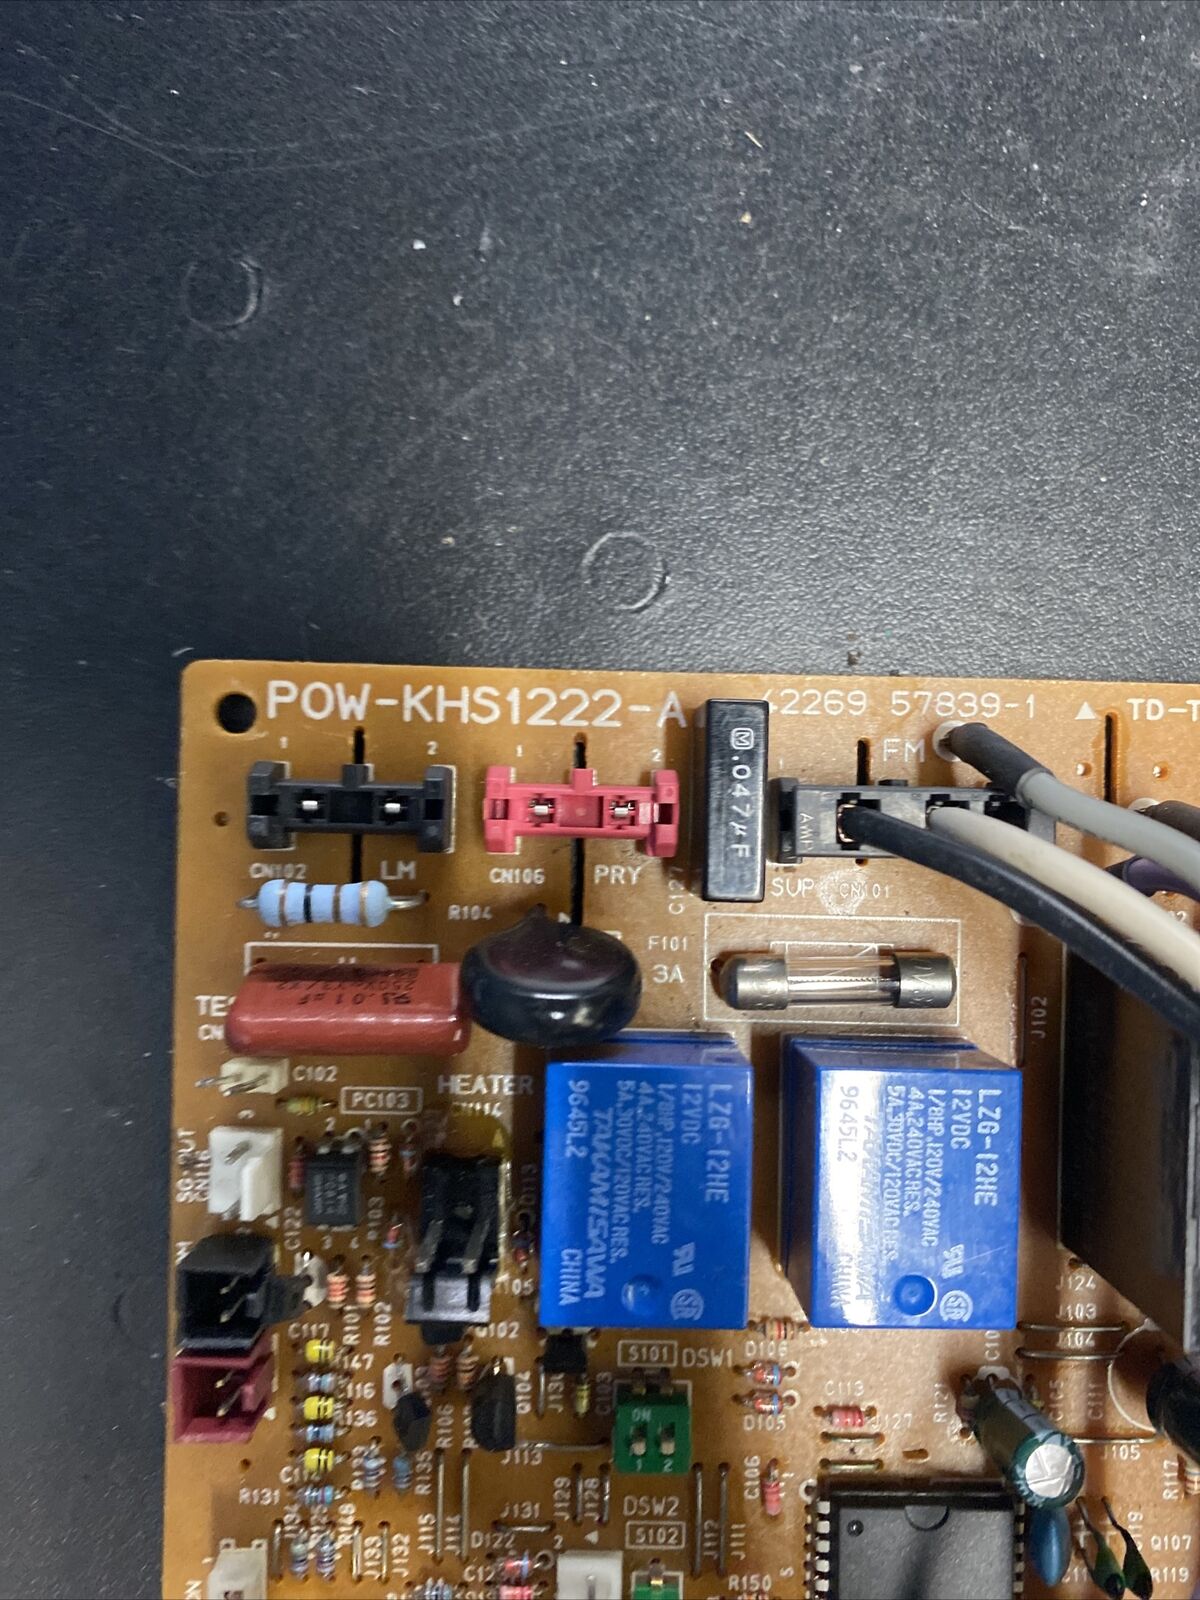 Control Board Mainboard POW-KHS1222 |BK1430 – A-Z Appliance Parts